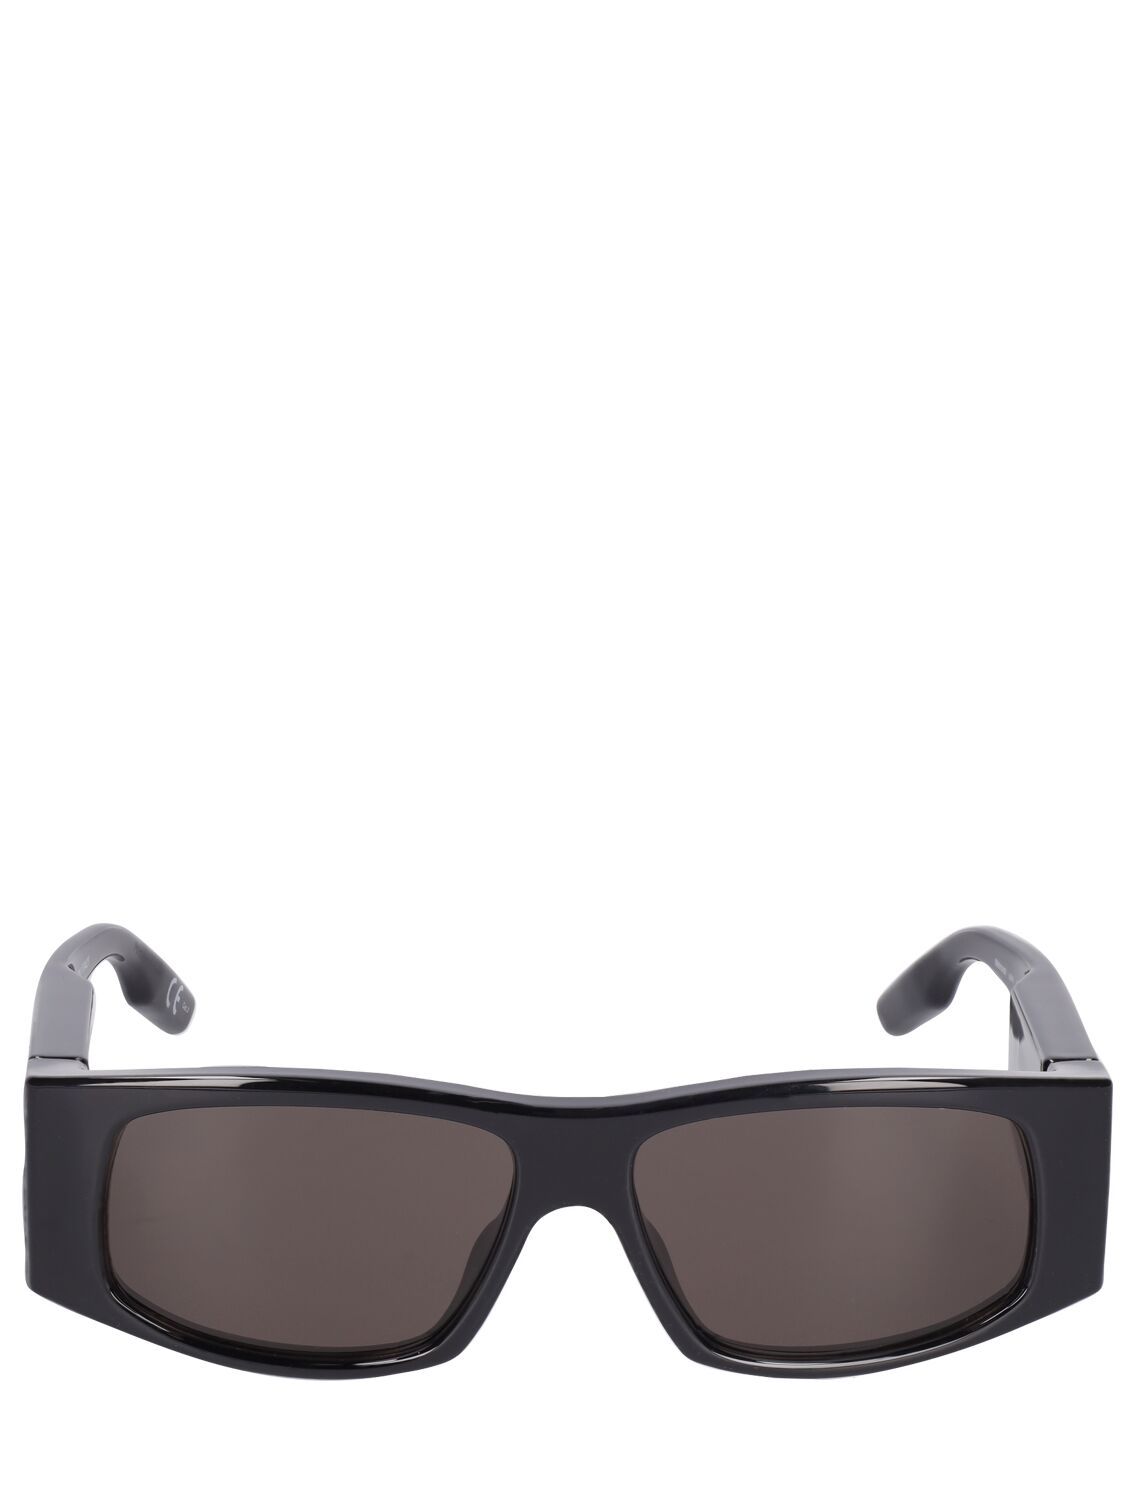 Image of 0100s Led Frame Sunglasses